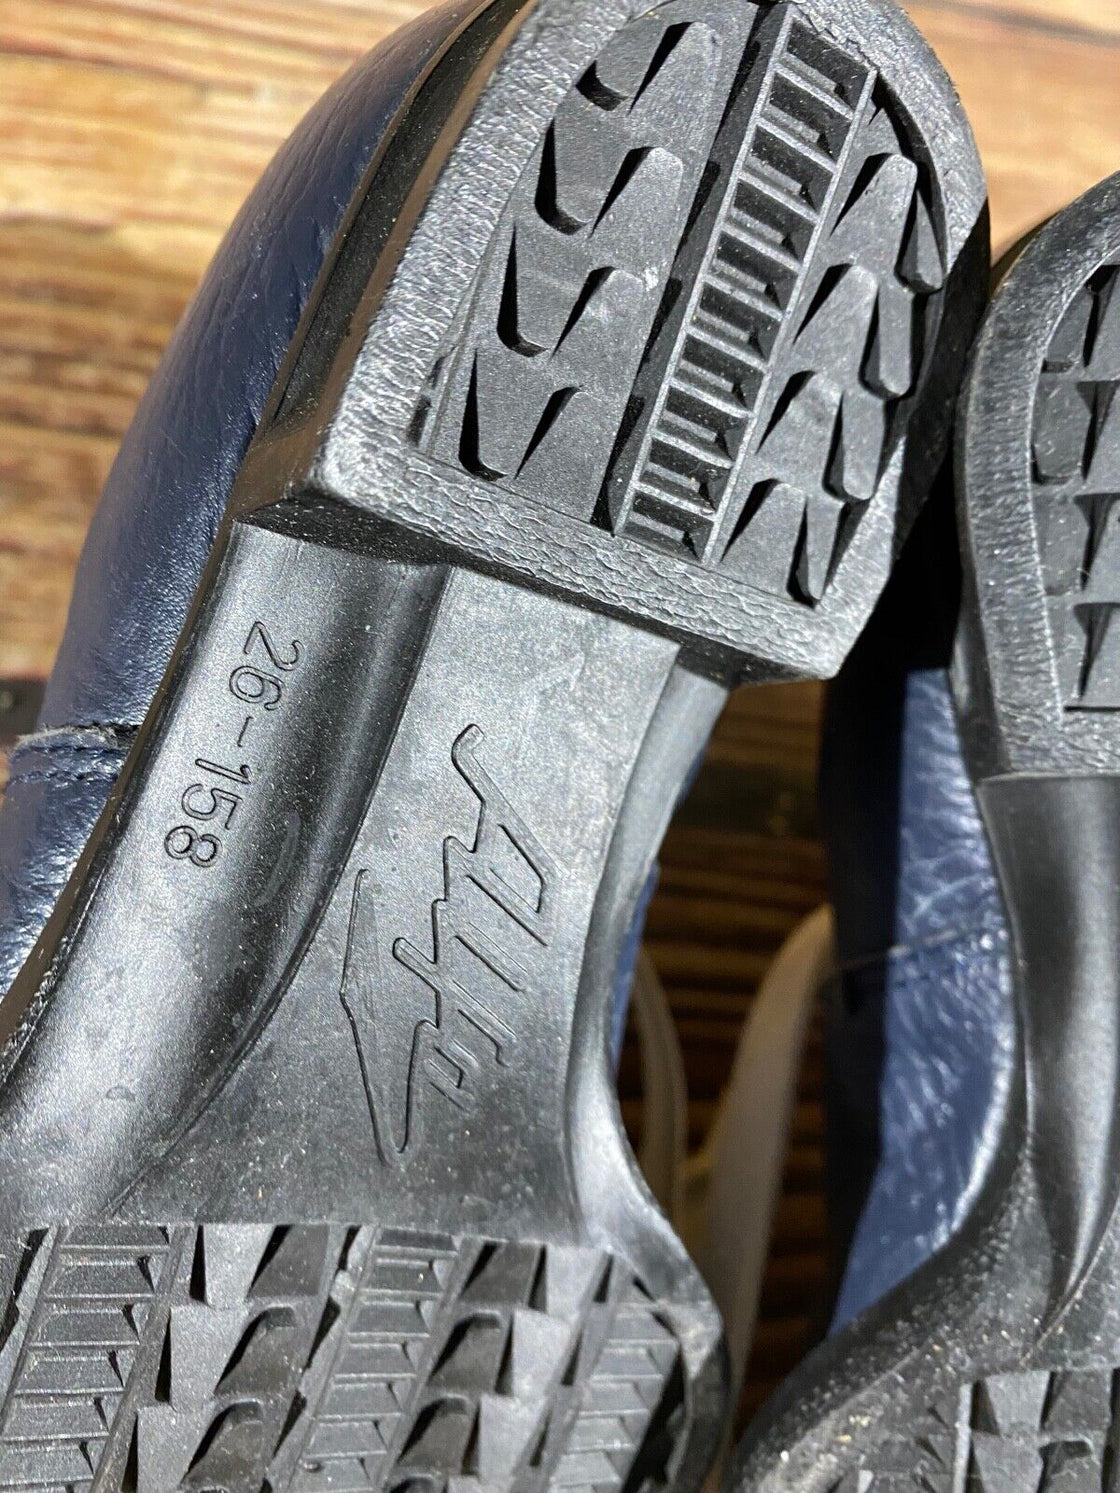 Alfa Vintage Kids Nordic Norm Cross Country Ski Boots Size EU26 US9 NN 75mm